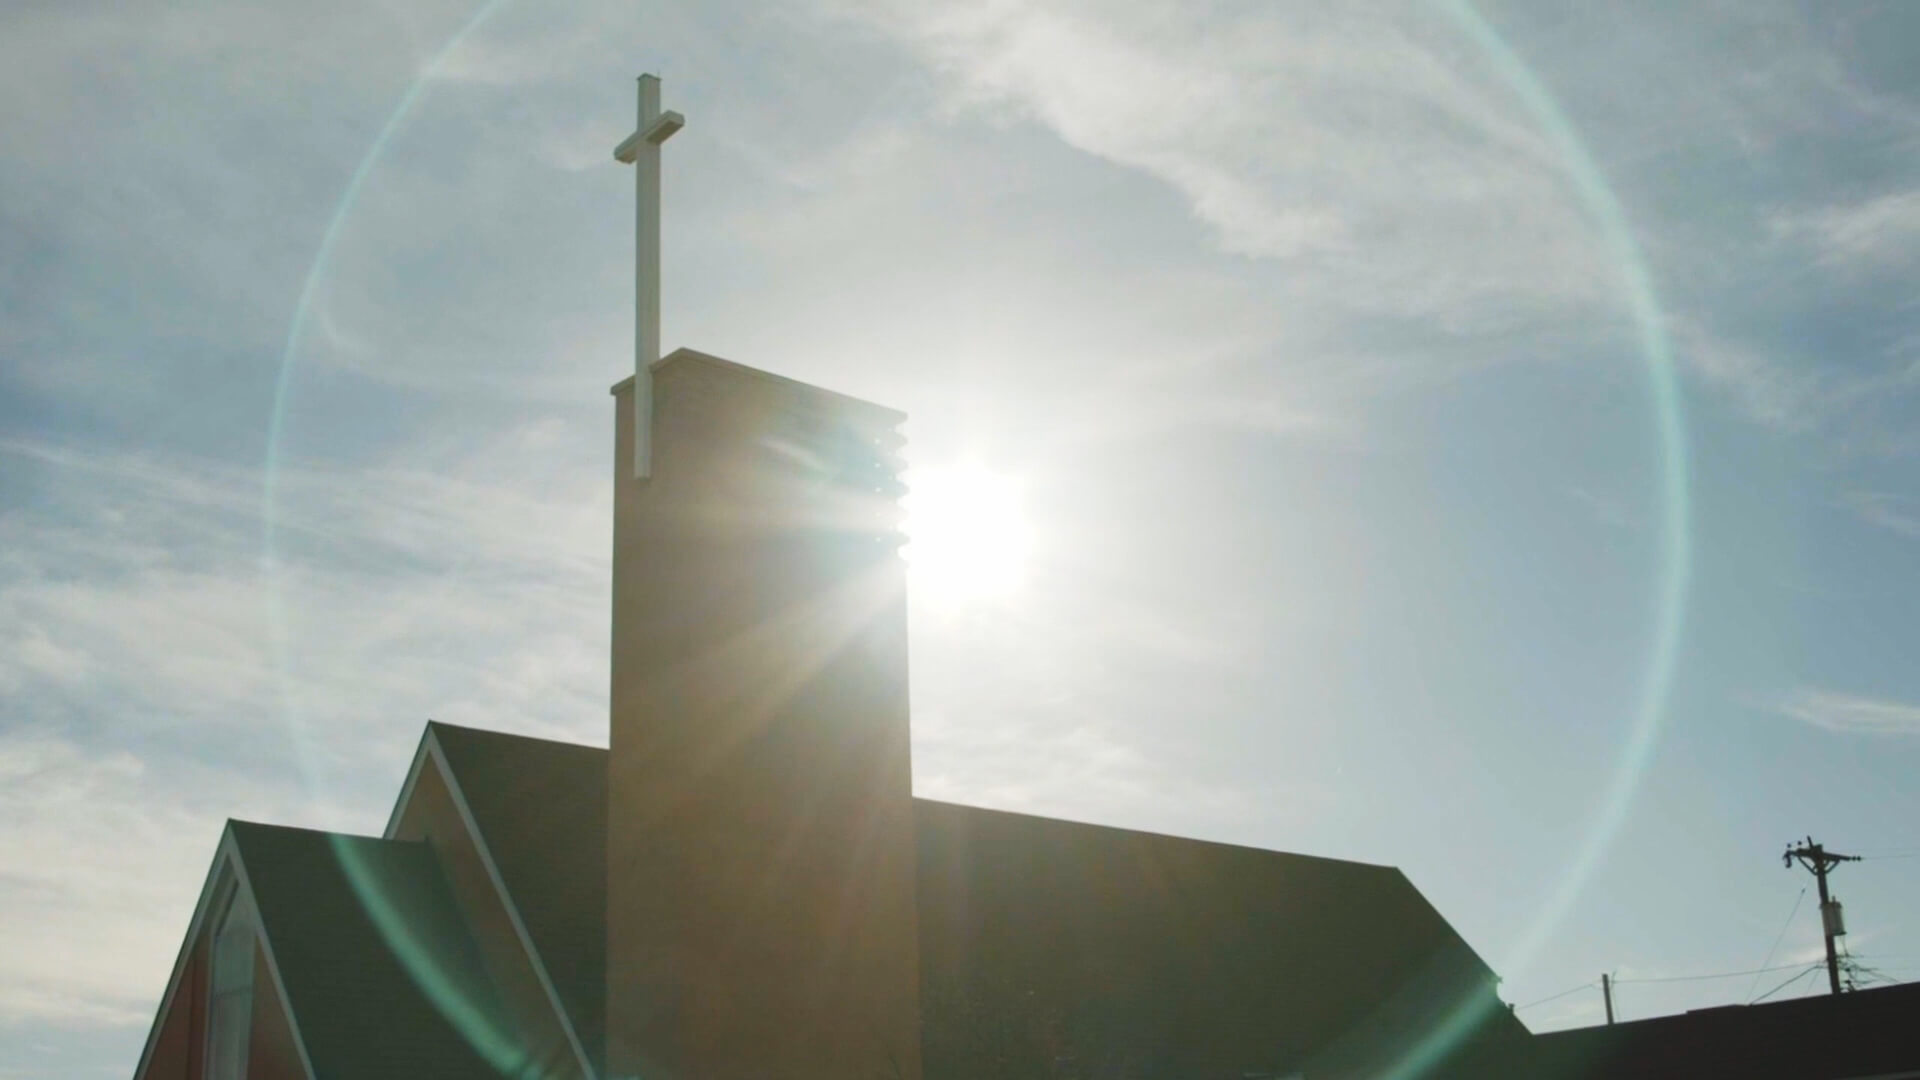 Sun halo around church spire with cross.